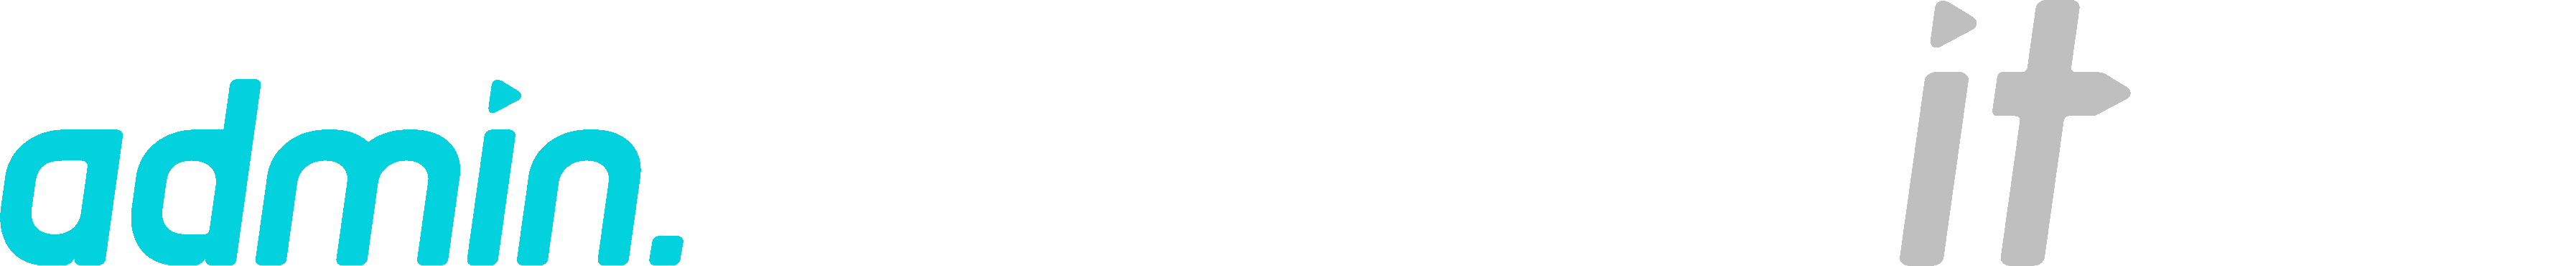 Minicabit Admin logo